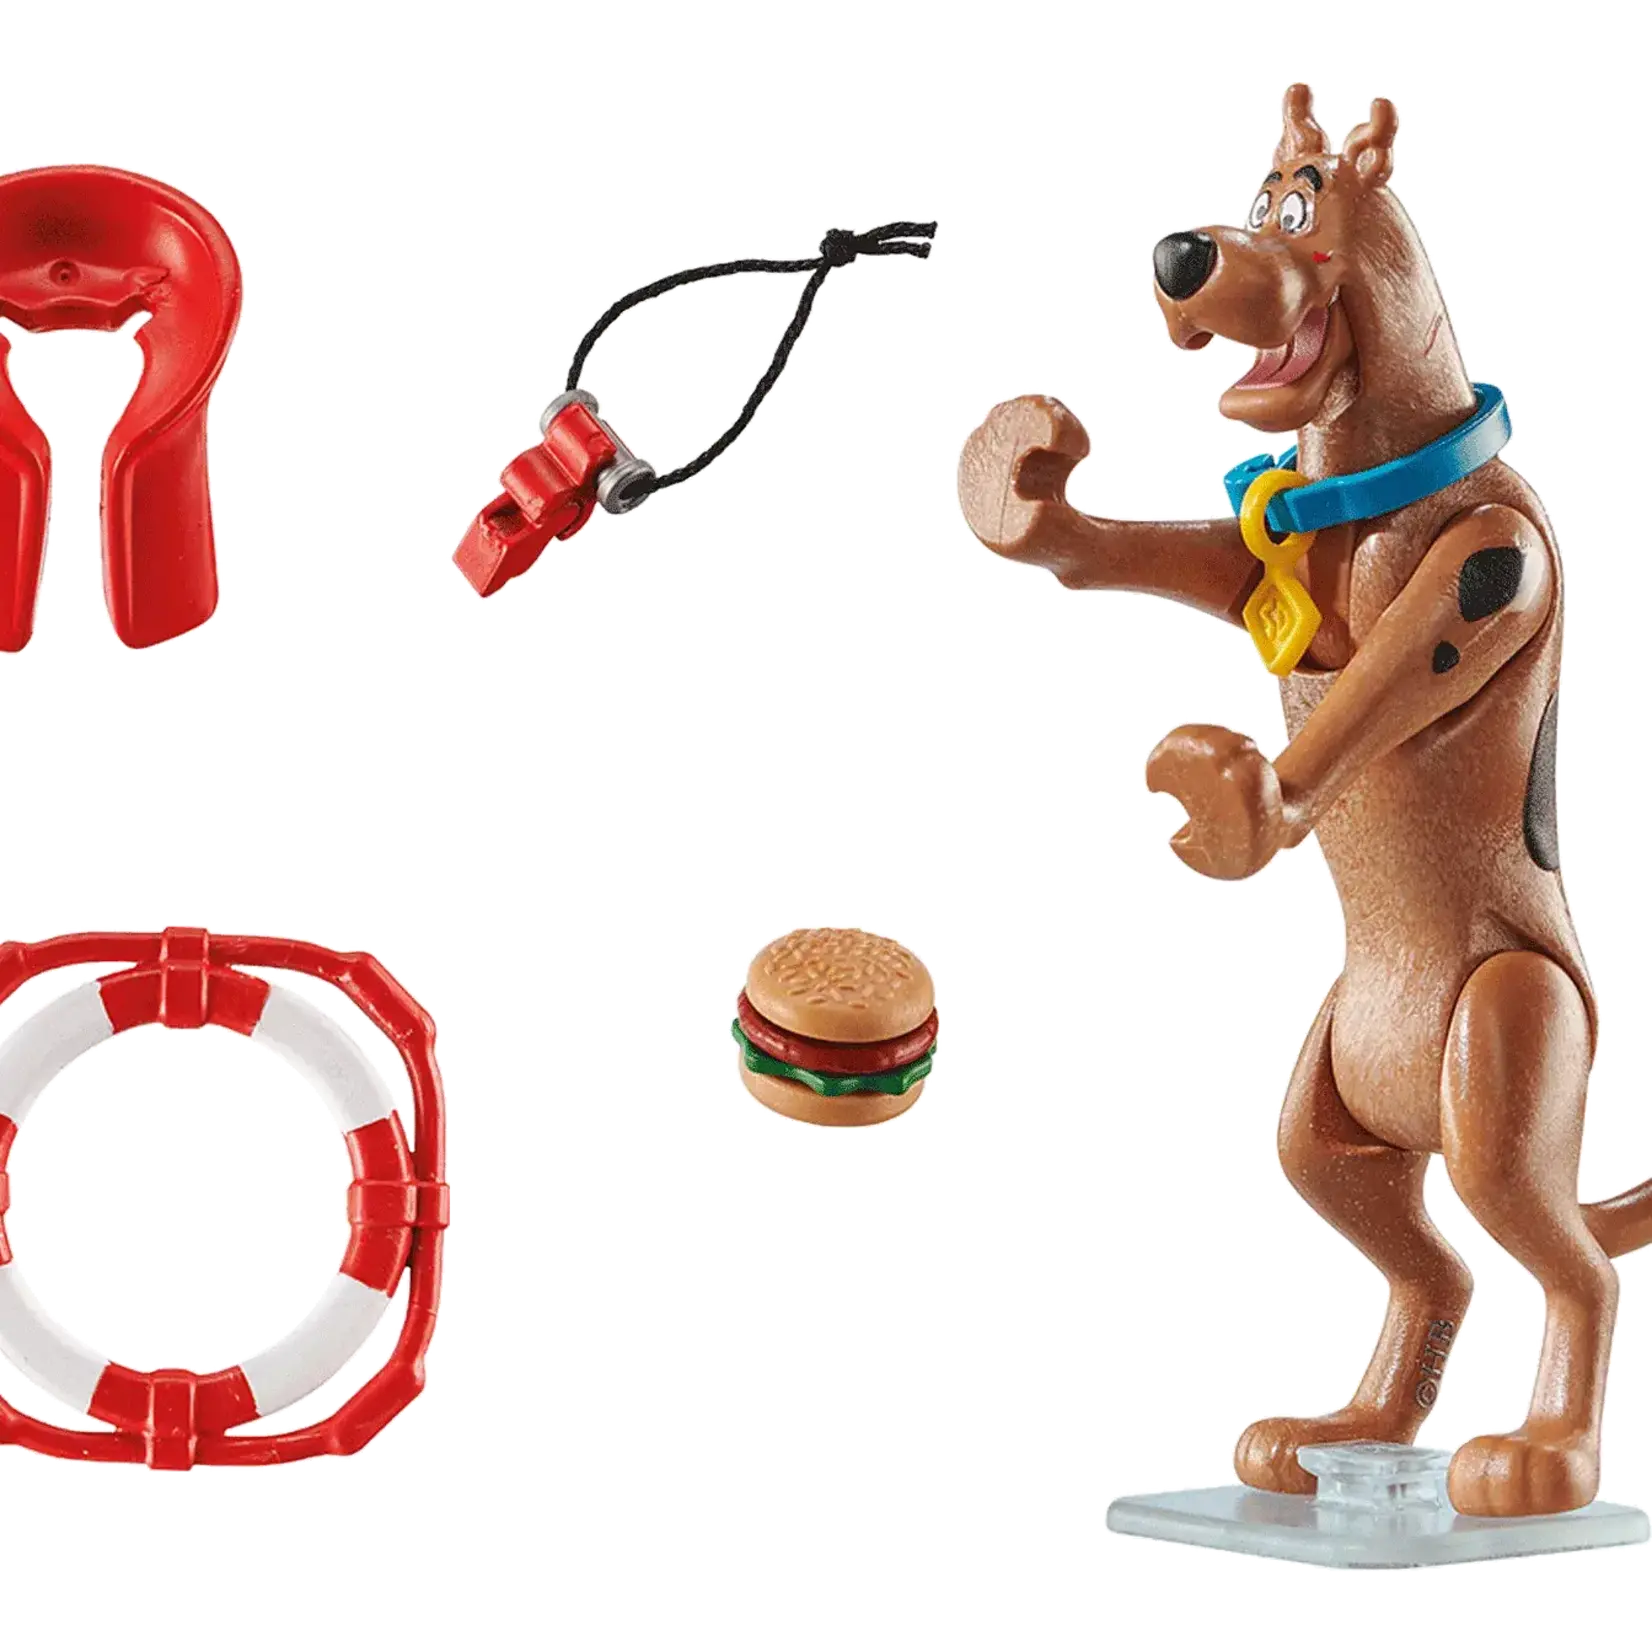 Playmobil Playmobil Scooby-Doo! 70713 - Sauveteur des mers